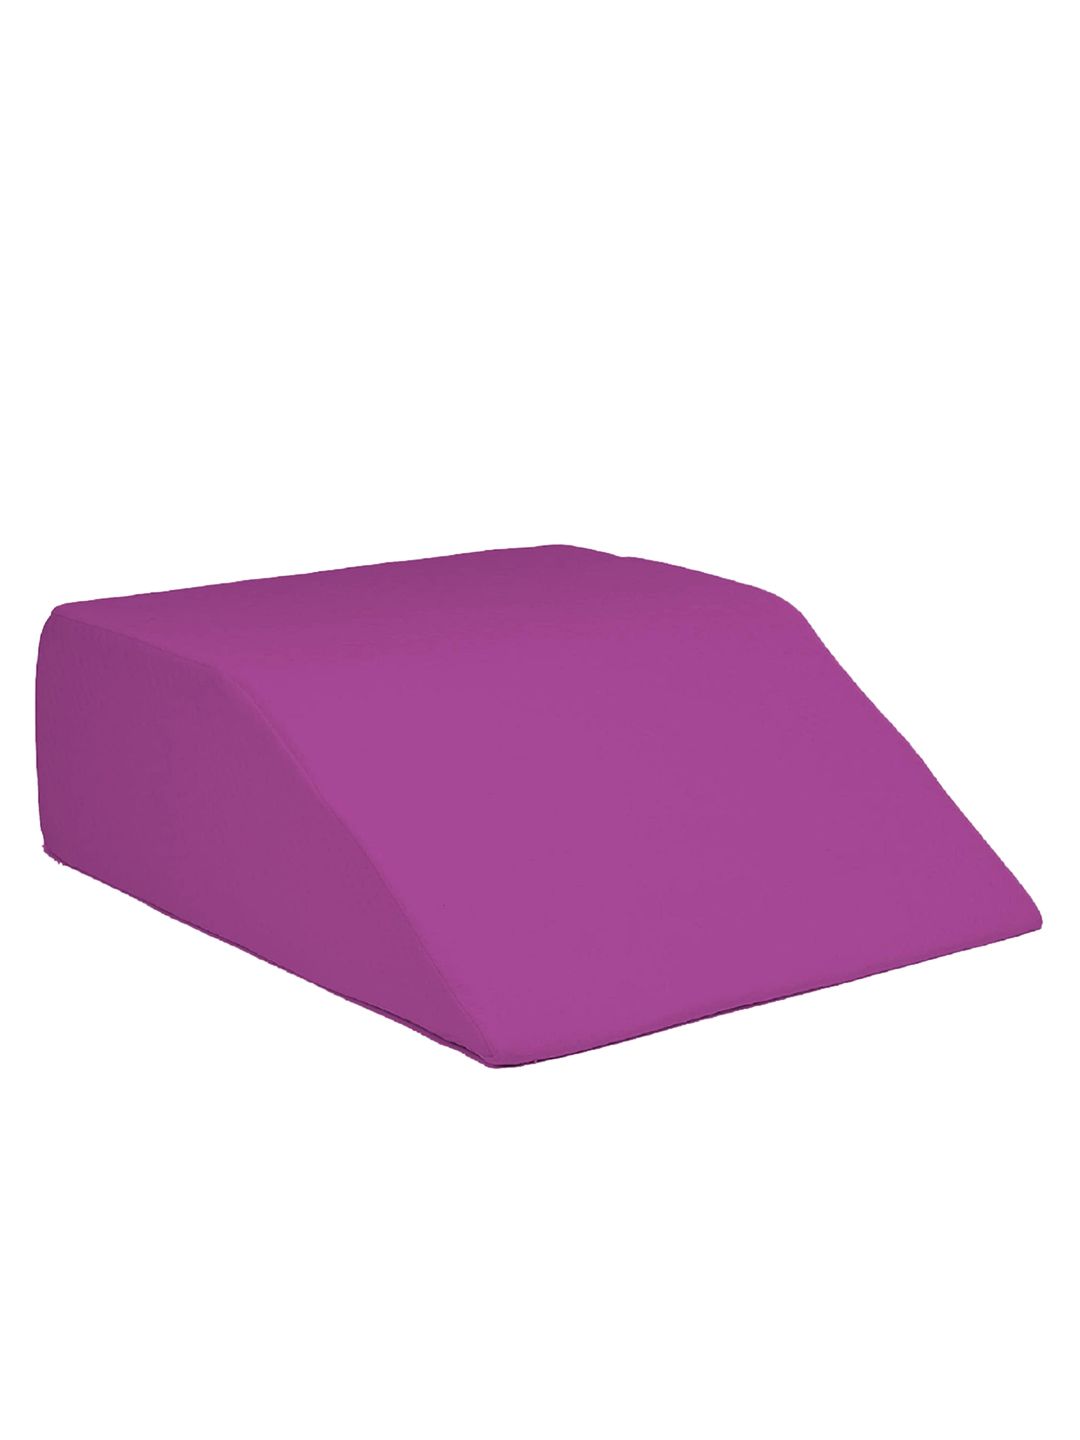 Pum Pum Purple Solid Leg Rest Elevation Wedge Pillow Price in India